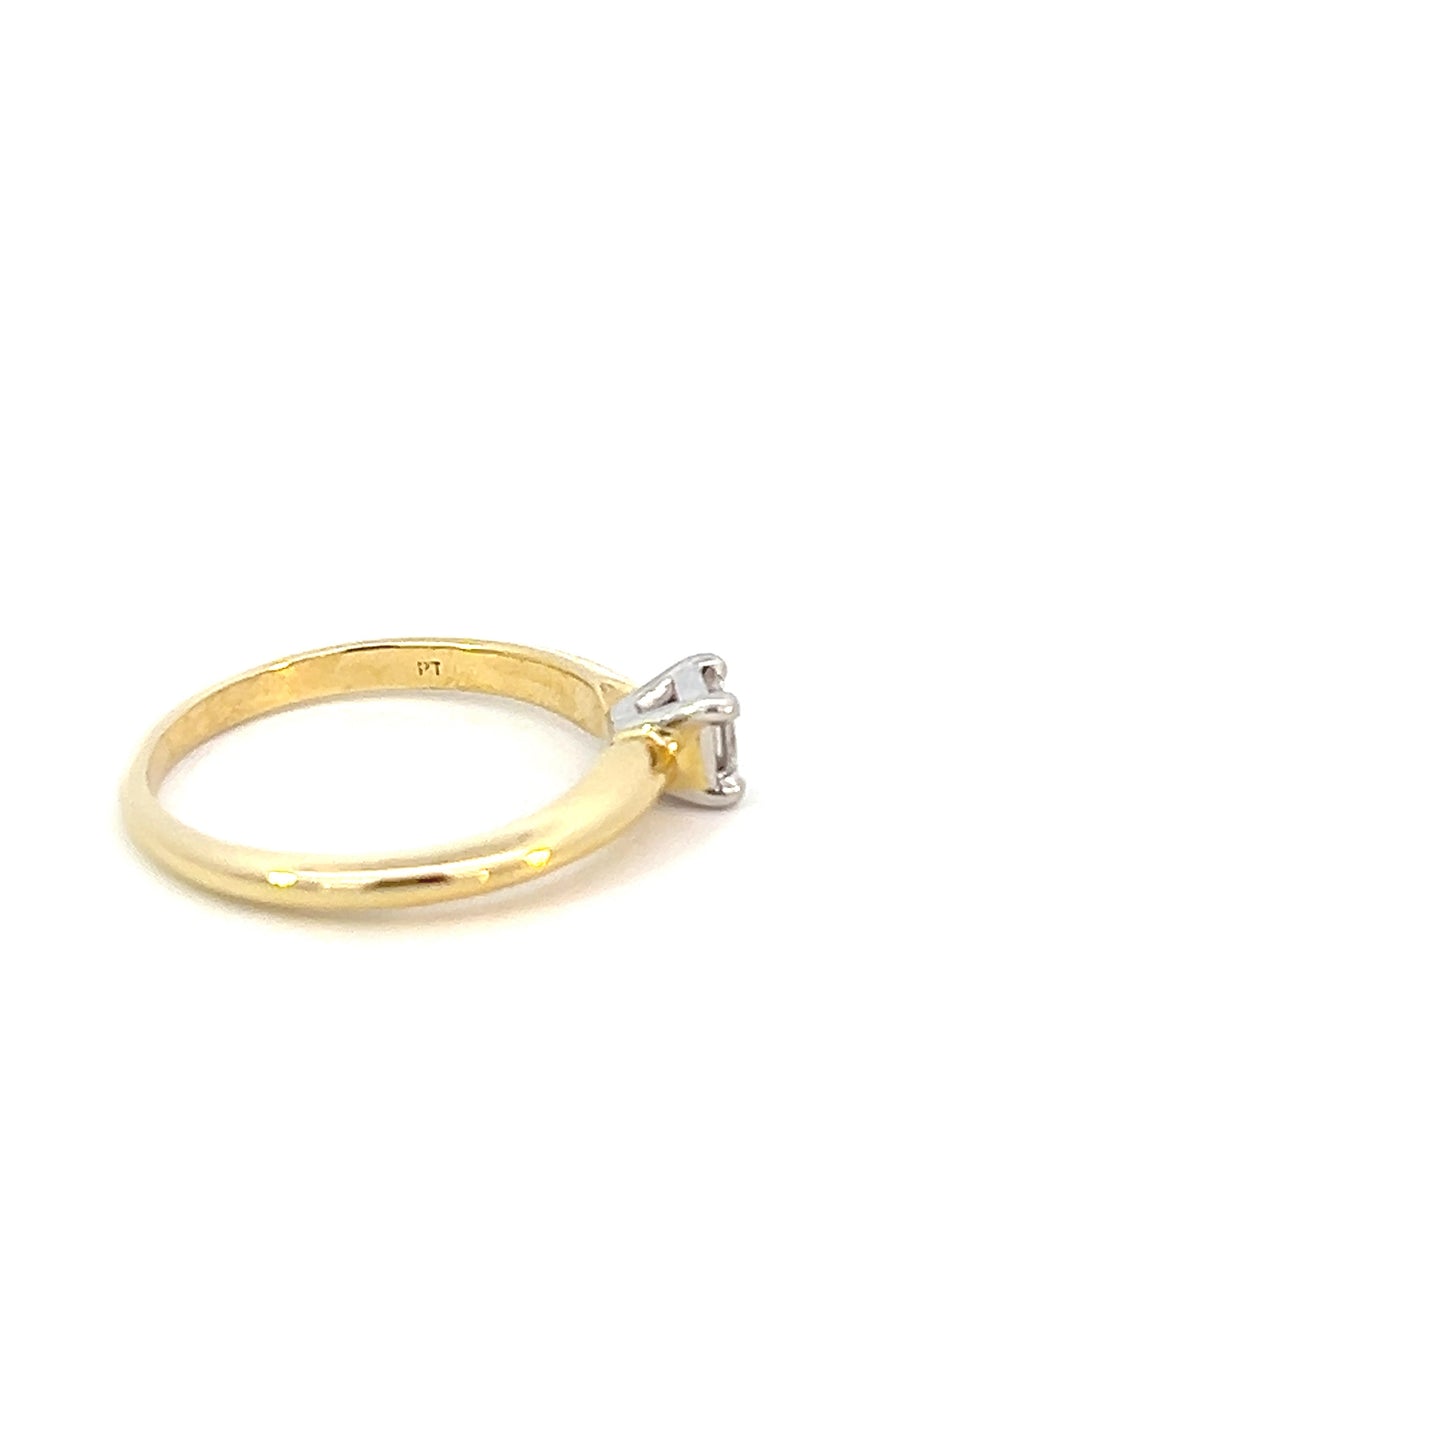 Princess Cut Solitaire Ring - Natural Diamond 0.26ct - 18k - Yellow Gold - Size 6.5